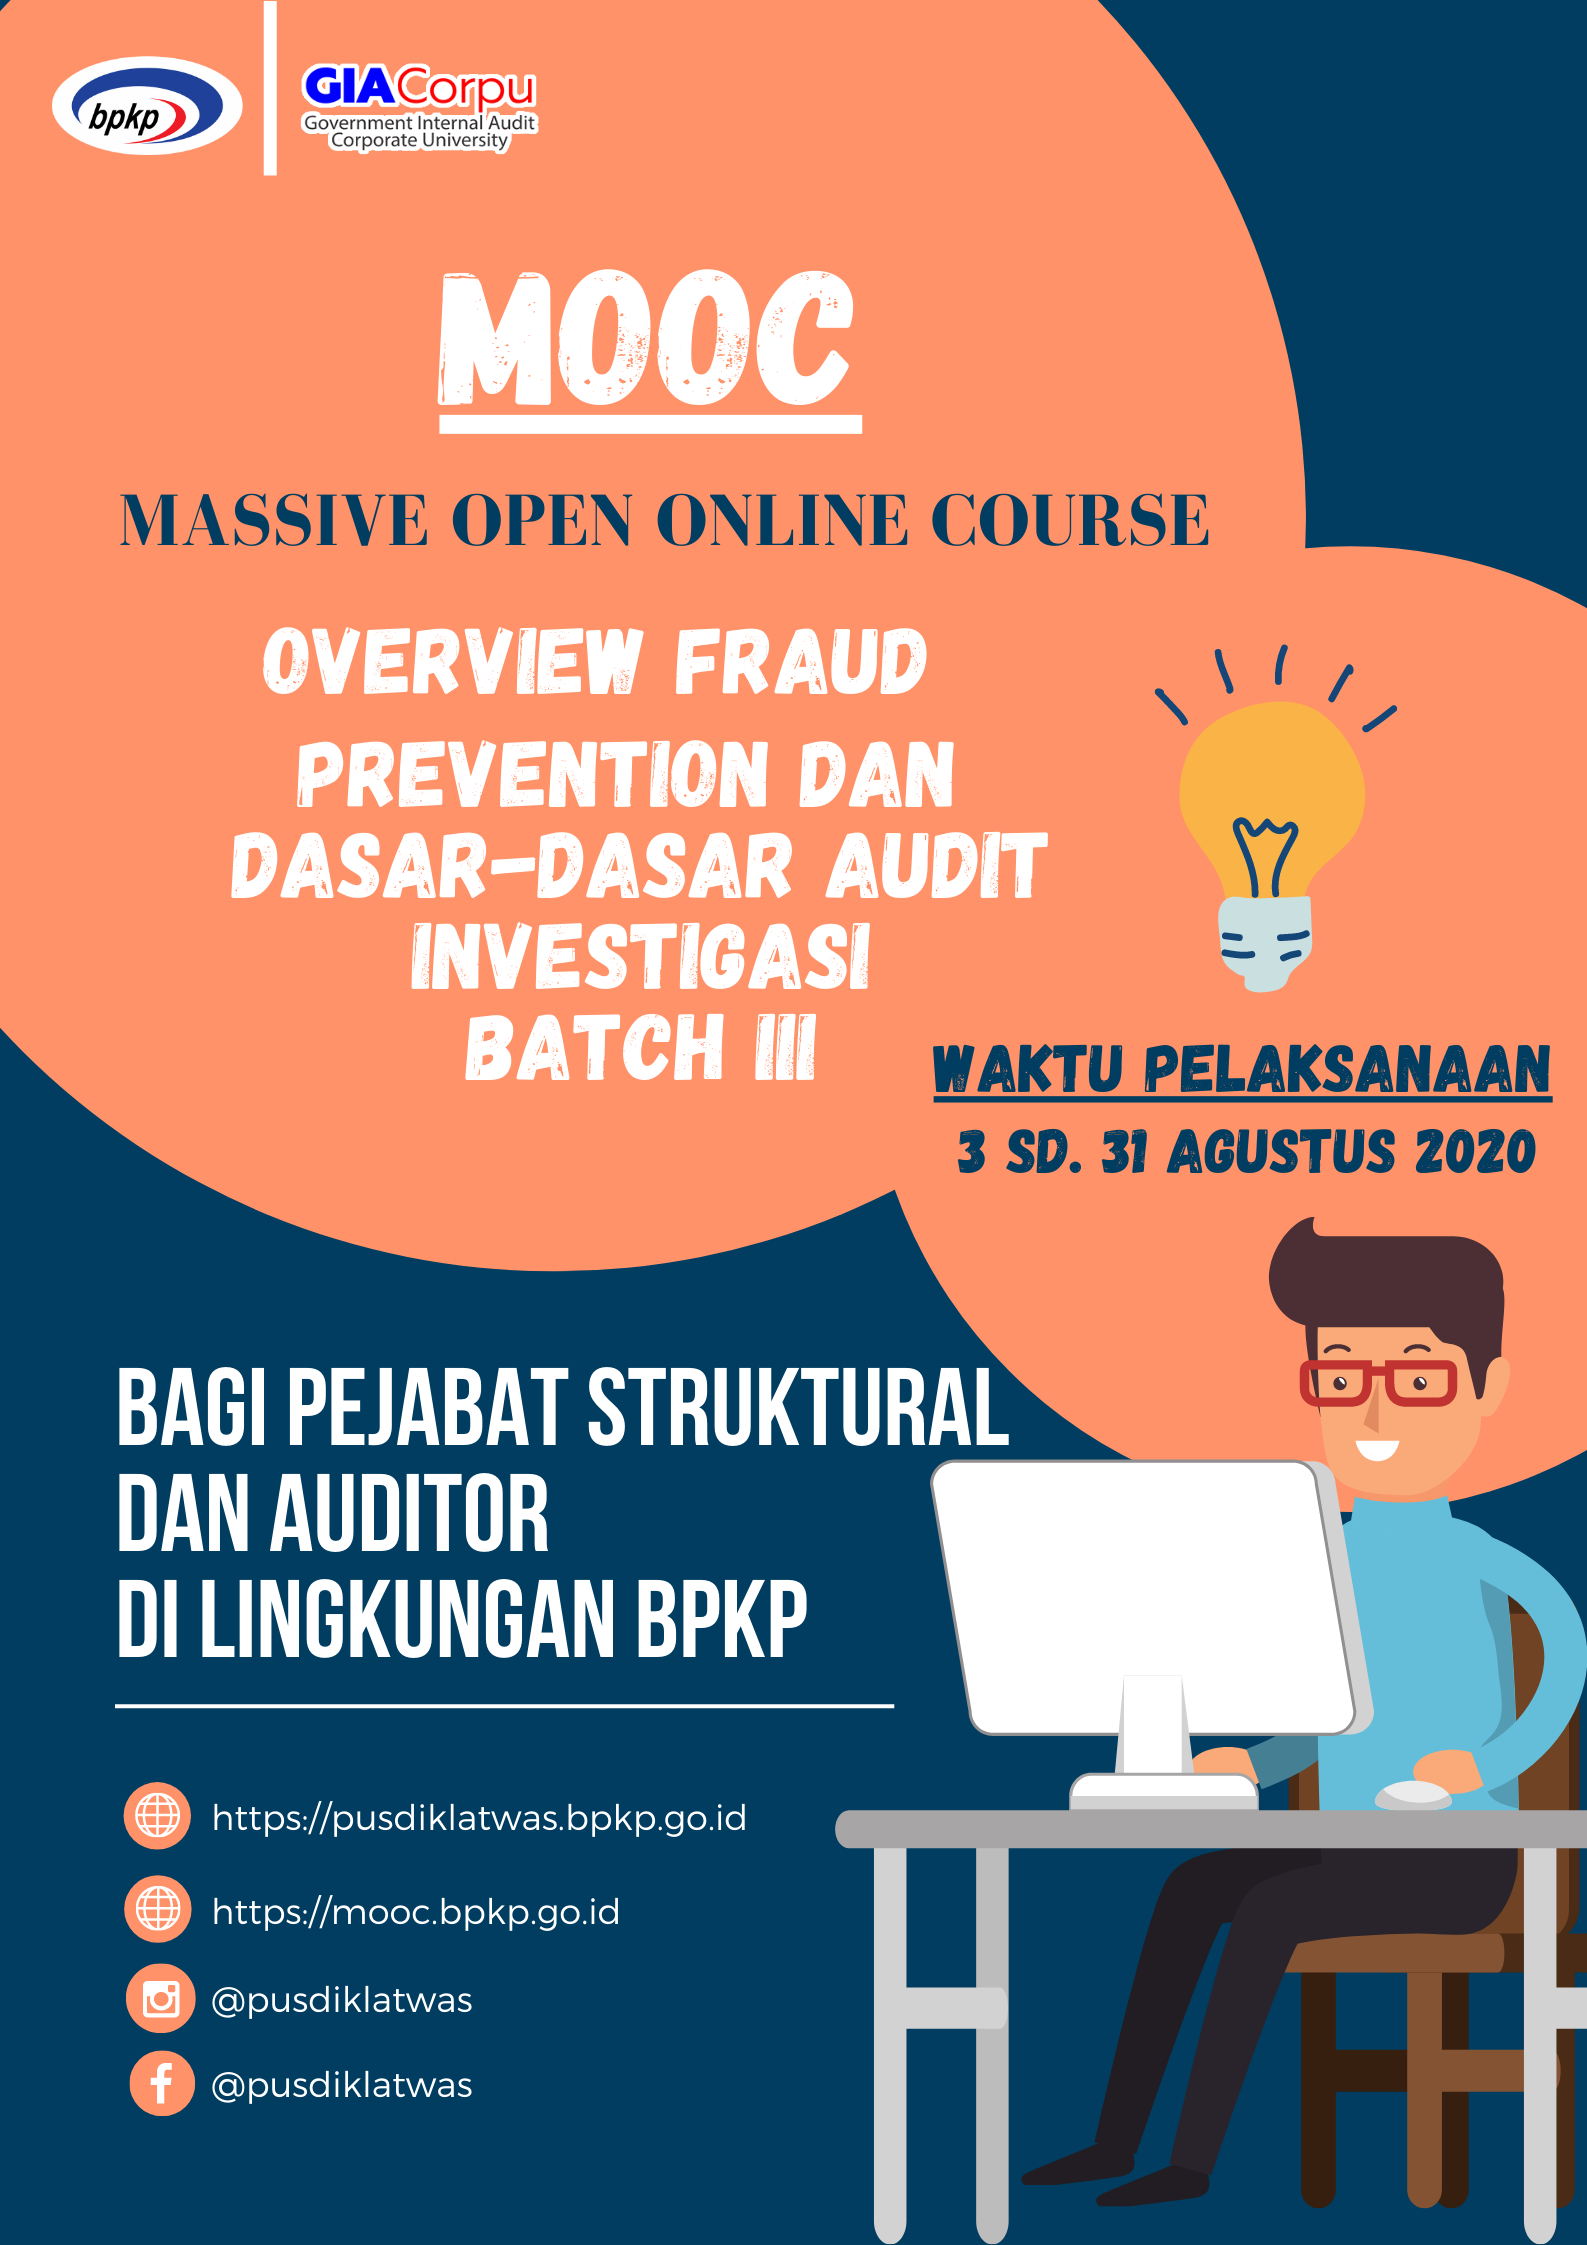 Overview Fraud Prevention & Dasar-Dasar Audit Investigasi (Batch III)